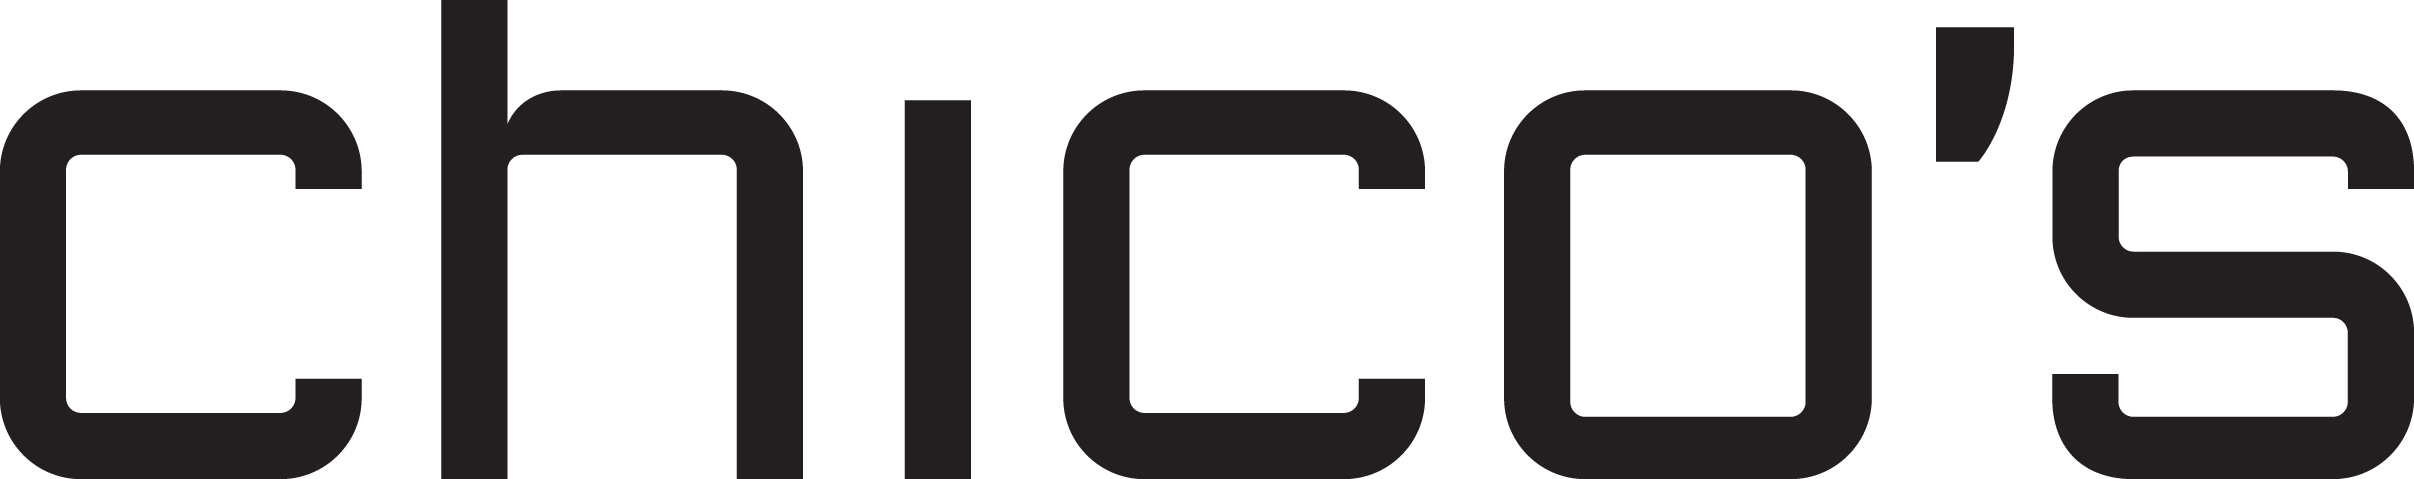 Chicos_Logo.jpg